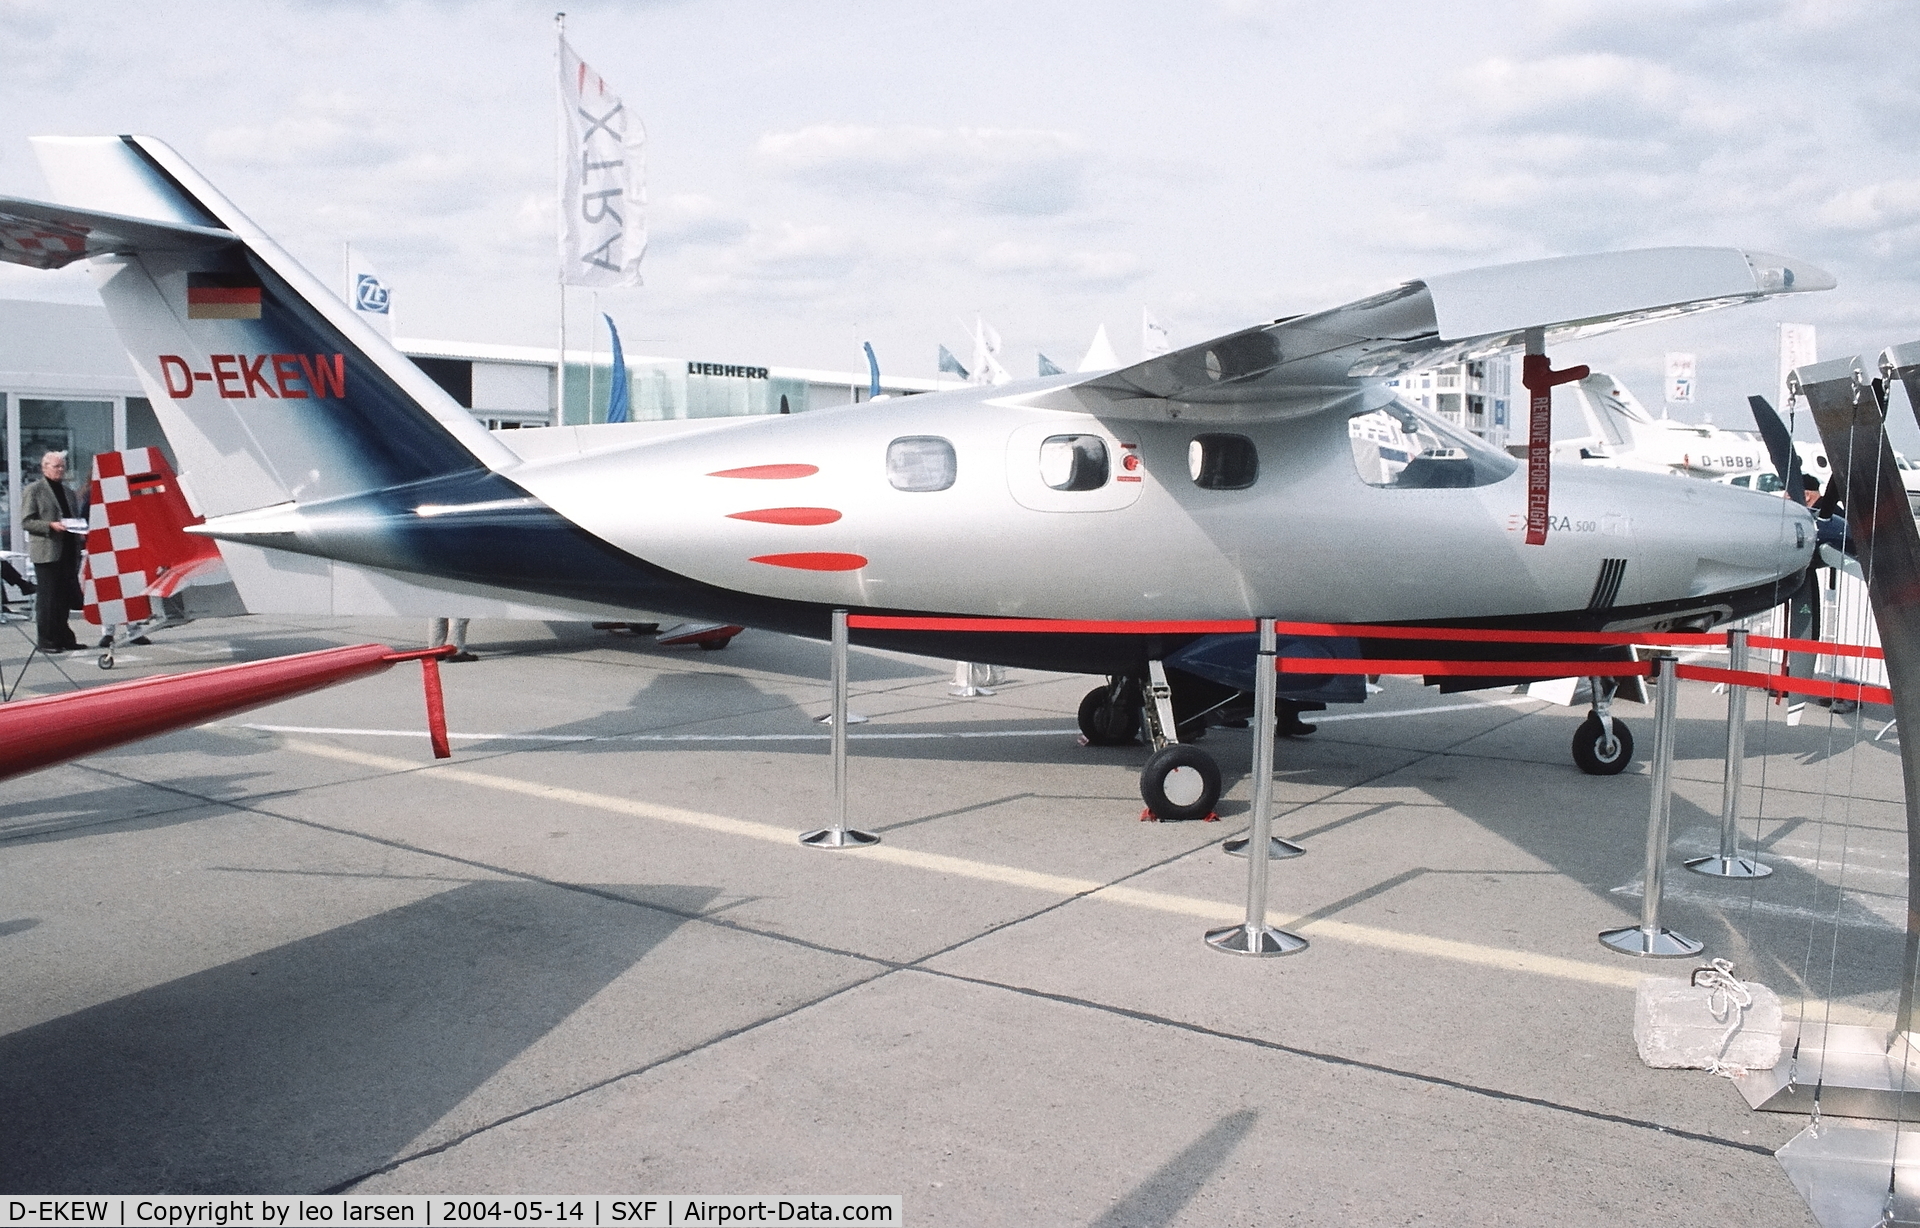 D-EKEW, 2002 Extra EA-500 C/N 001, Berlin ILA 14.5.2004